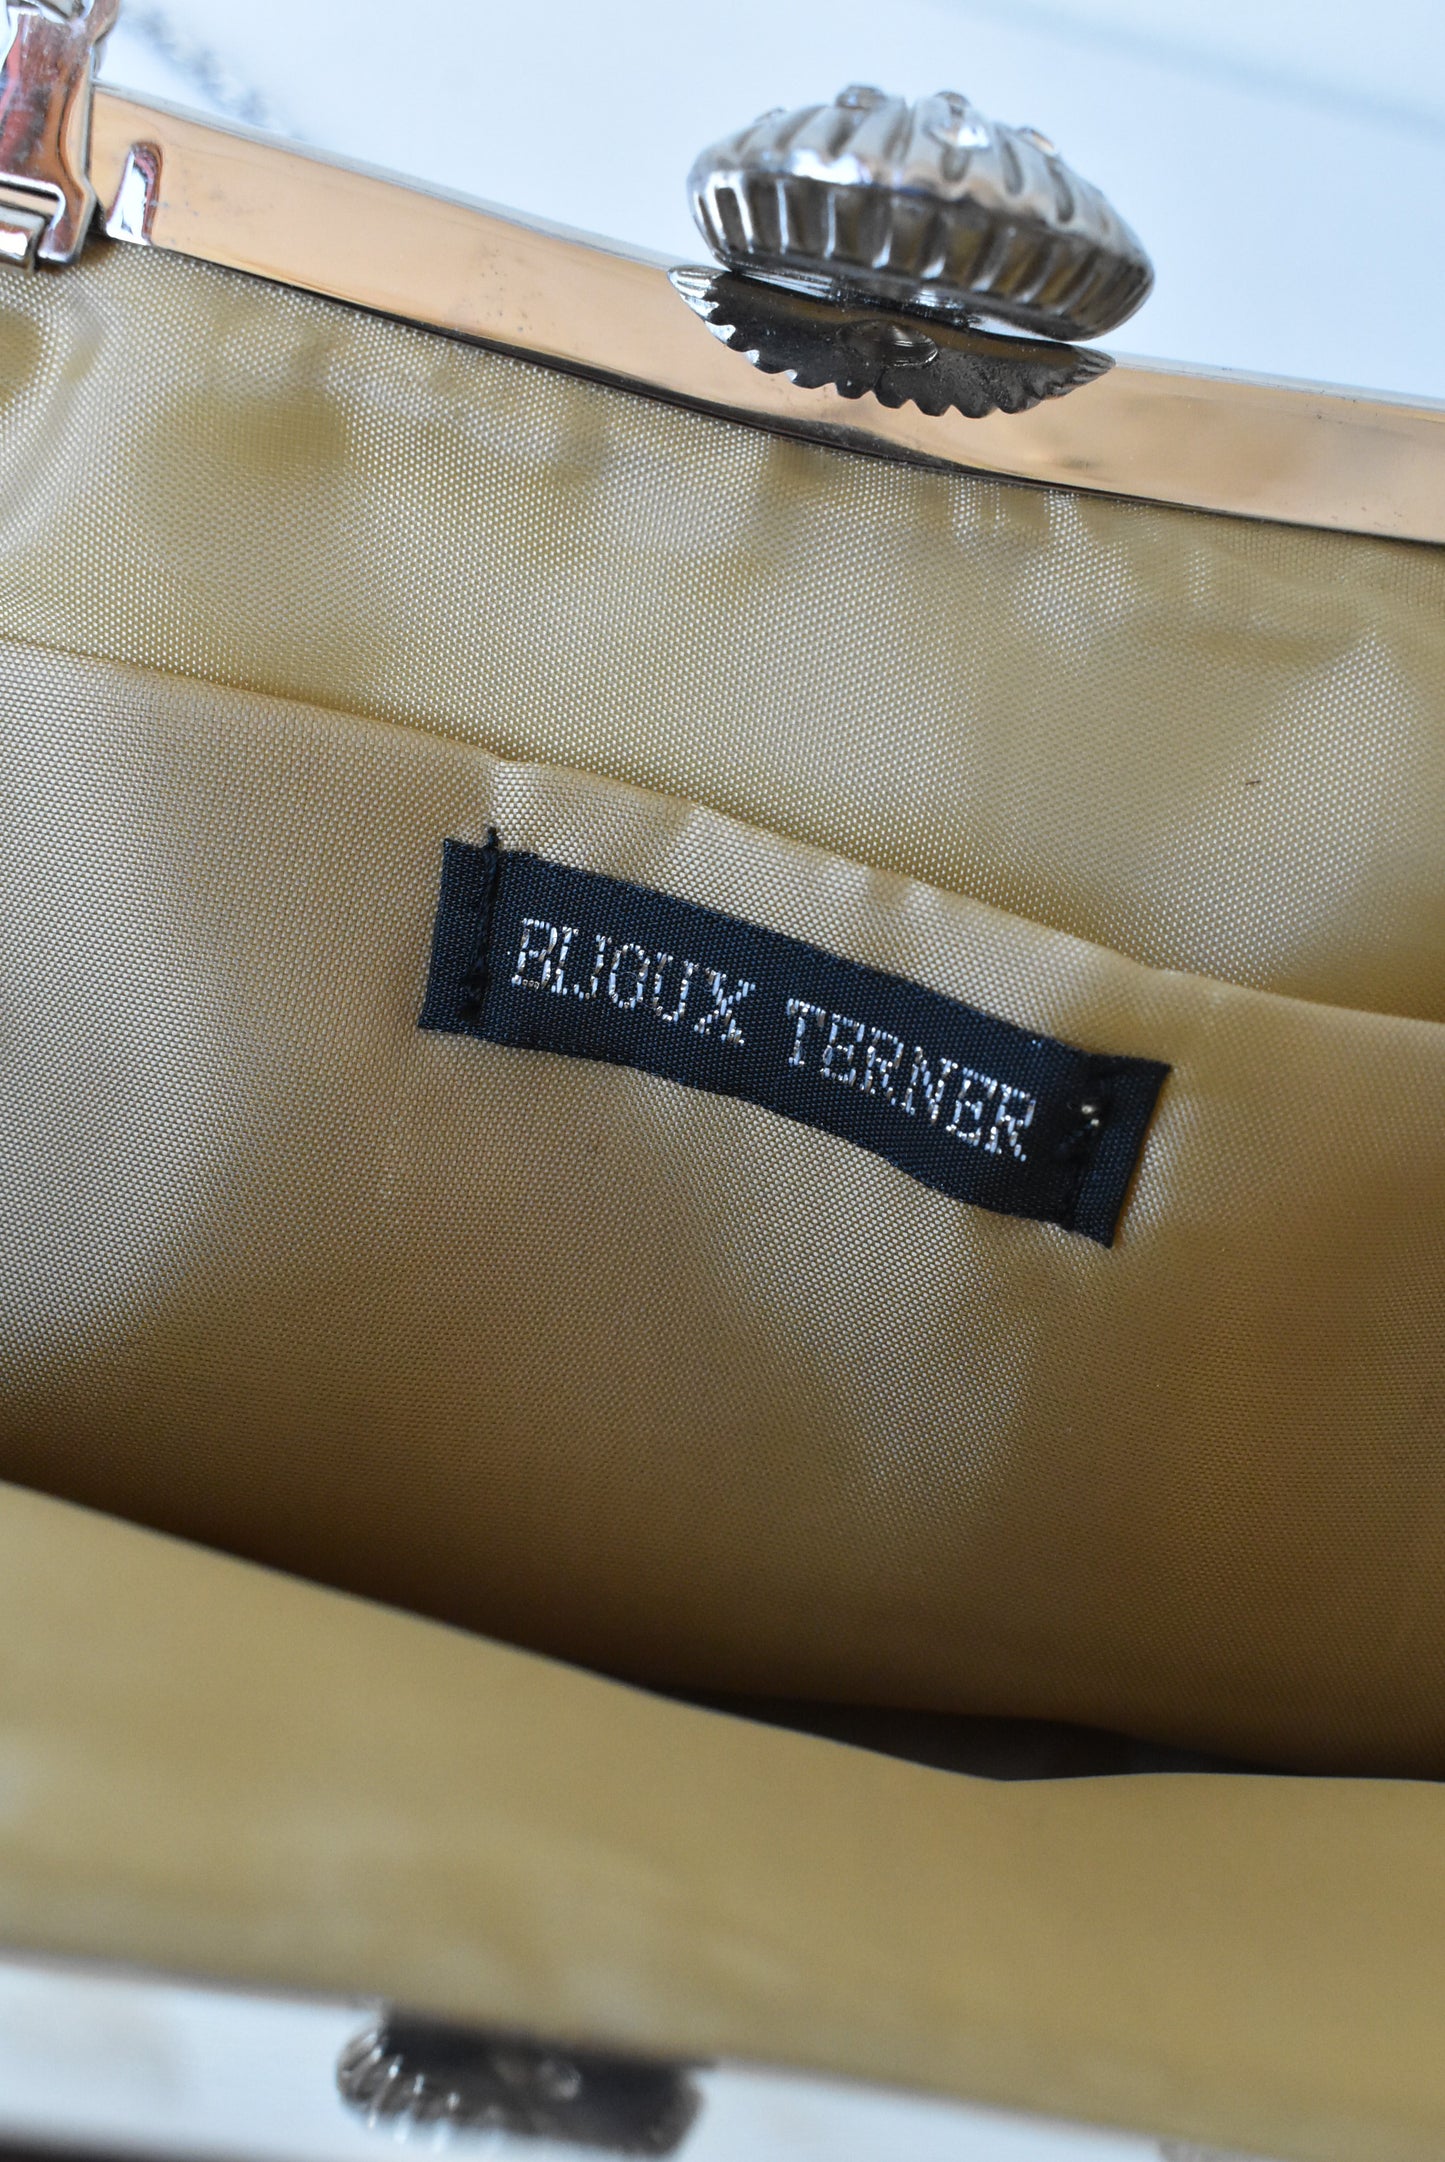 Bijoux Terner shell clasp golden fabric clutch bag